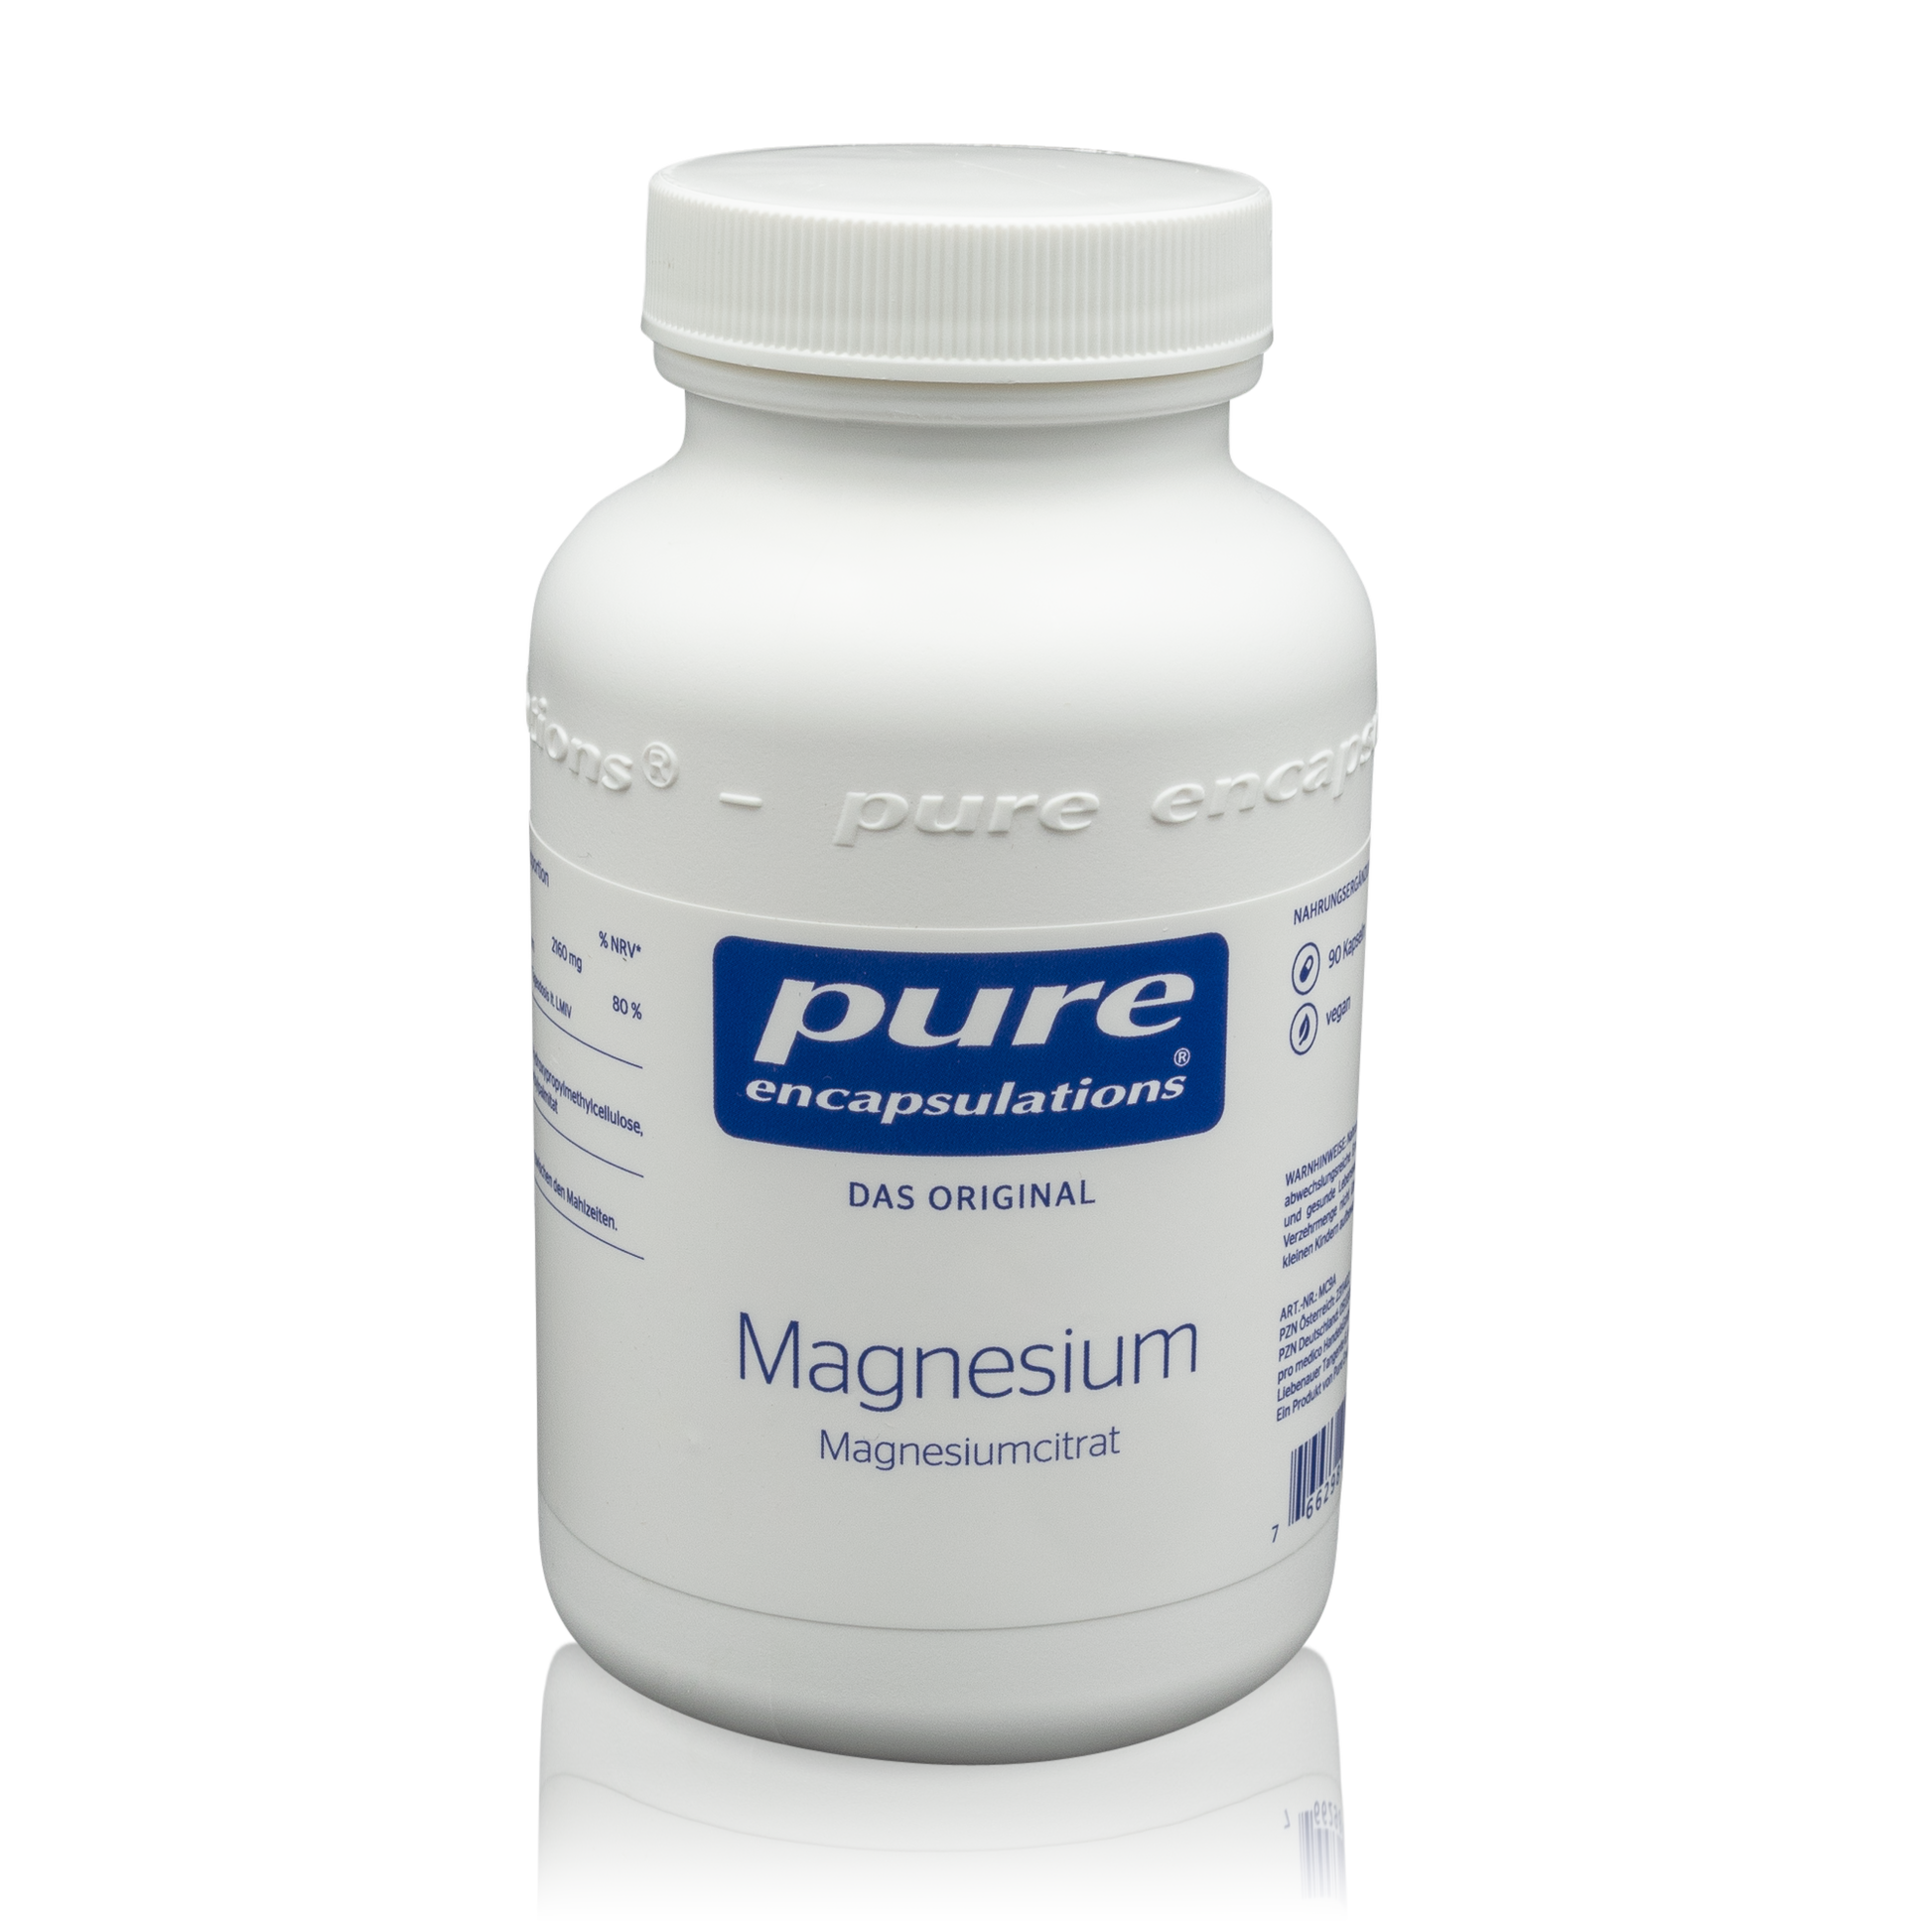 Pure Encapsulations - Das Original - Magnesium (90 St./109g) - PZN: 5133036 - ROTE.PLACE